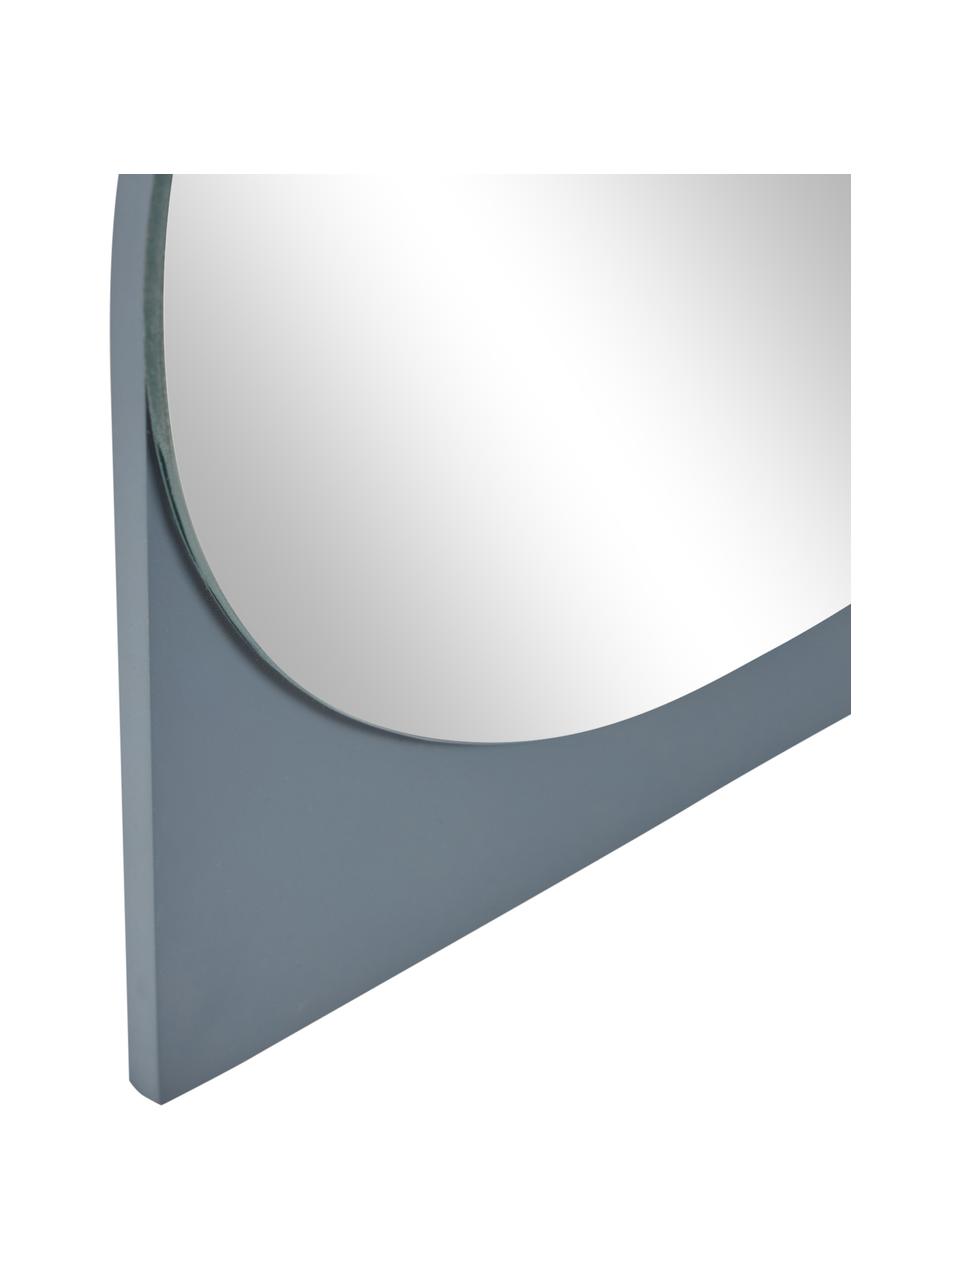 Ovale make-up spiegel Mica met grijze houten frame, Lijst: gecoat MDF, Grijs, B 23 cm x H 16 cm